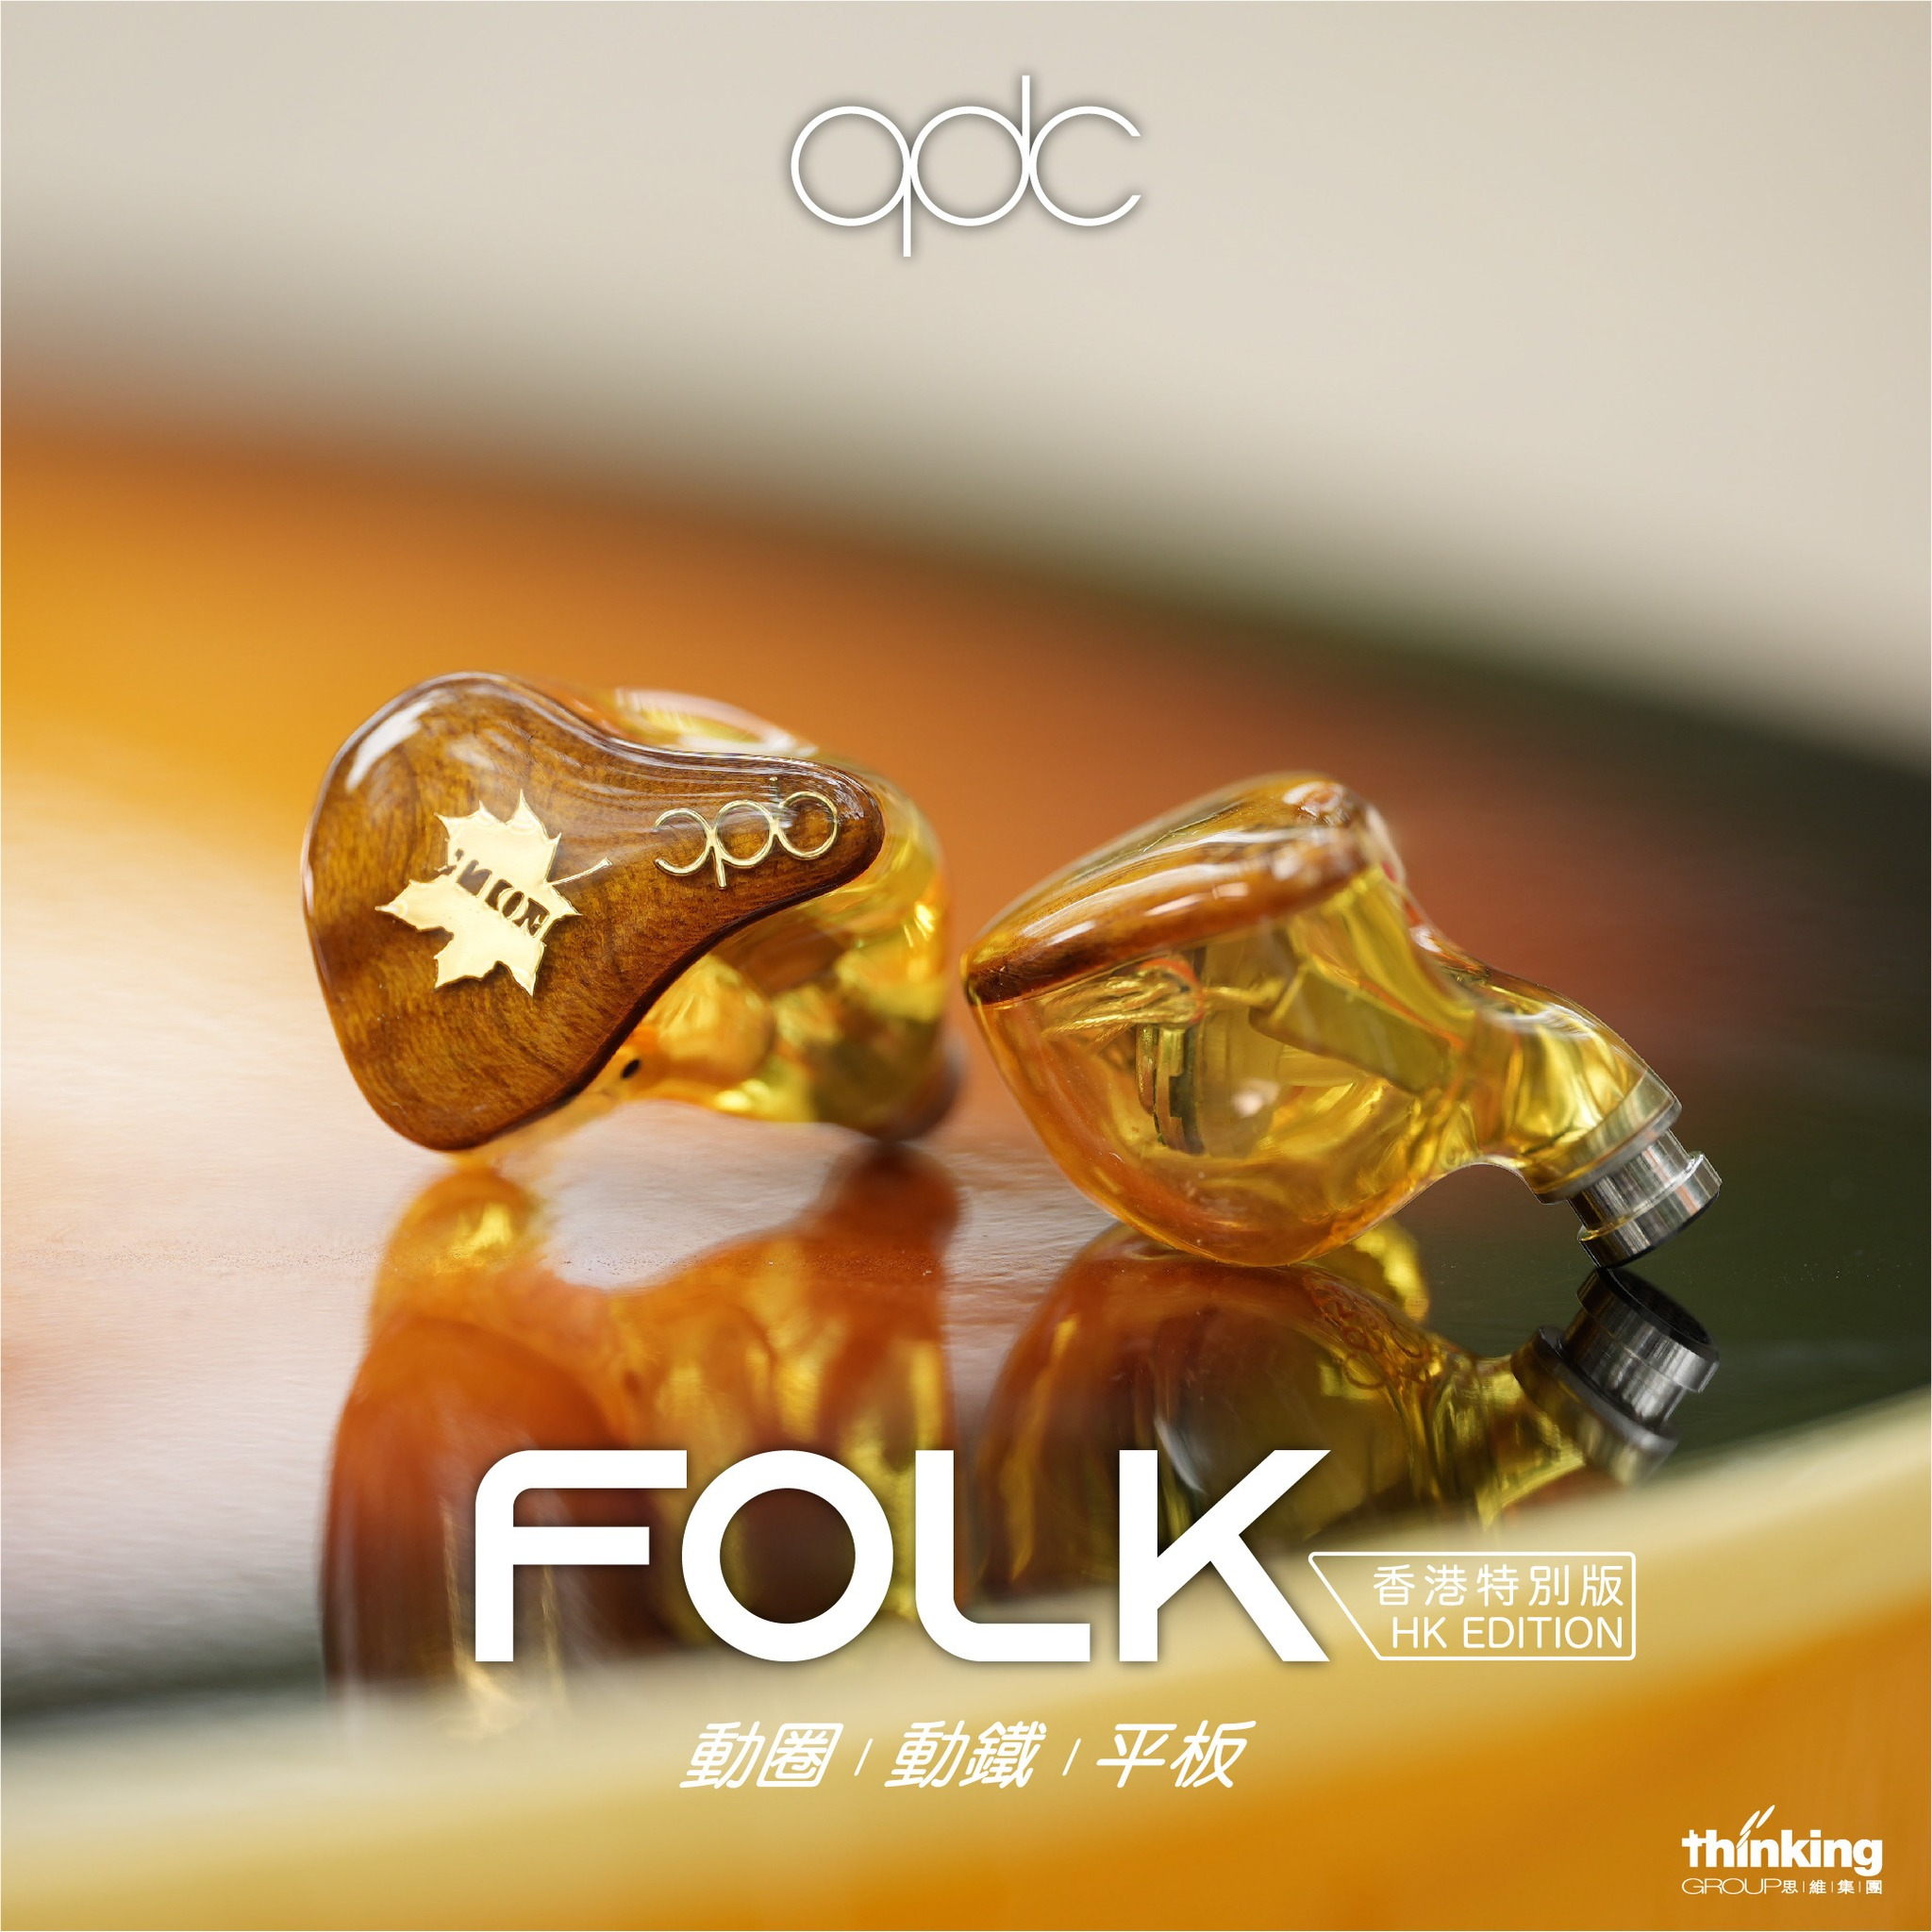 qdc Folk 混合單元耳機(香港特別版) | DMA 泛音